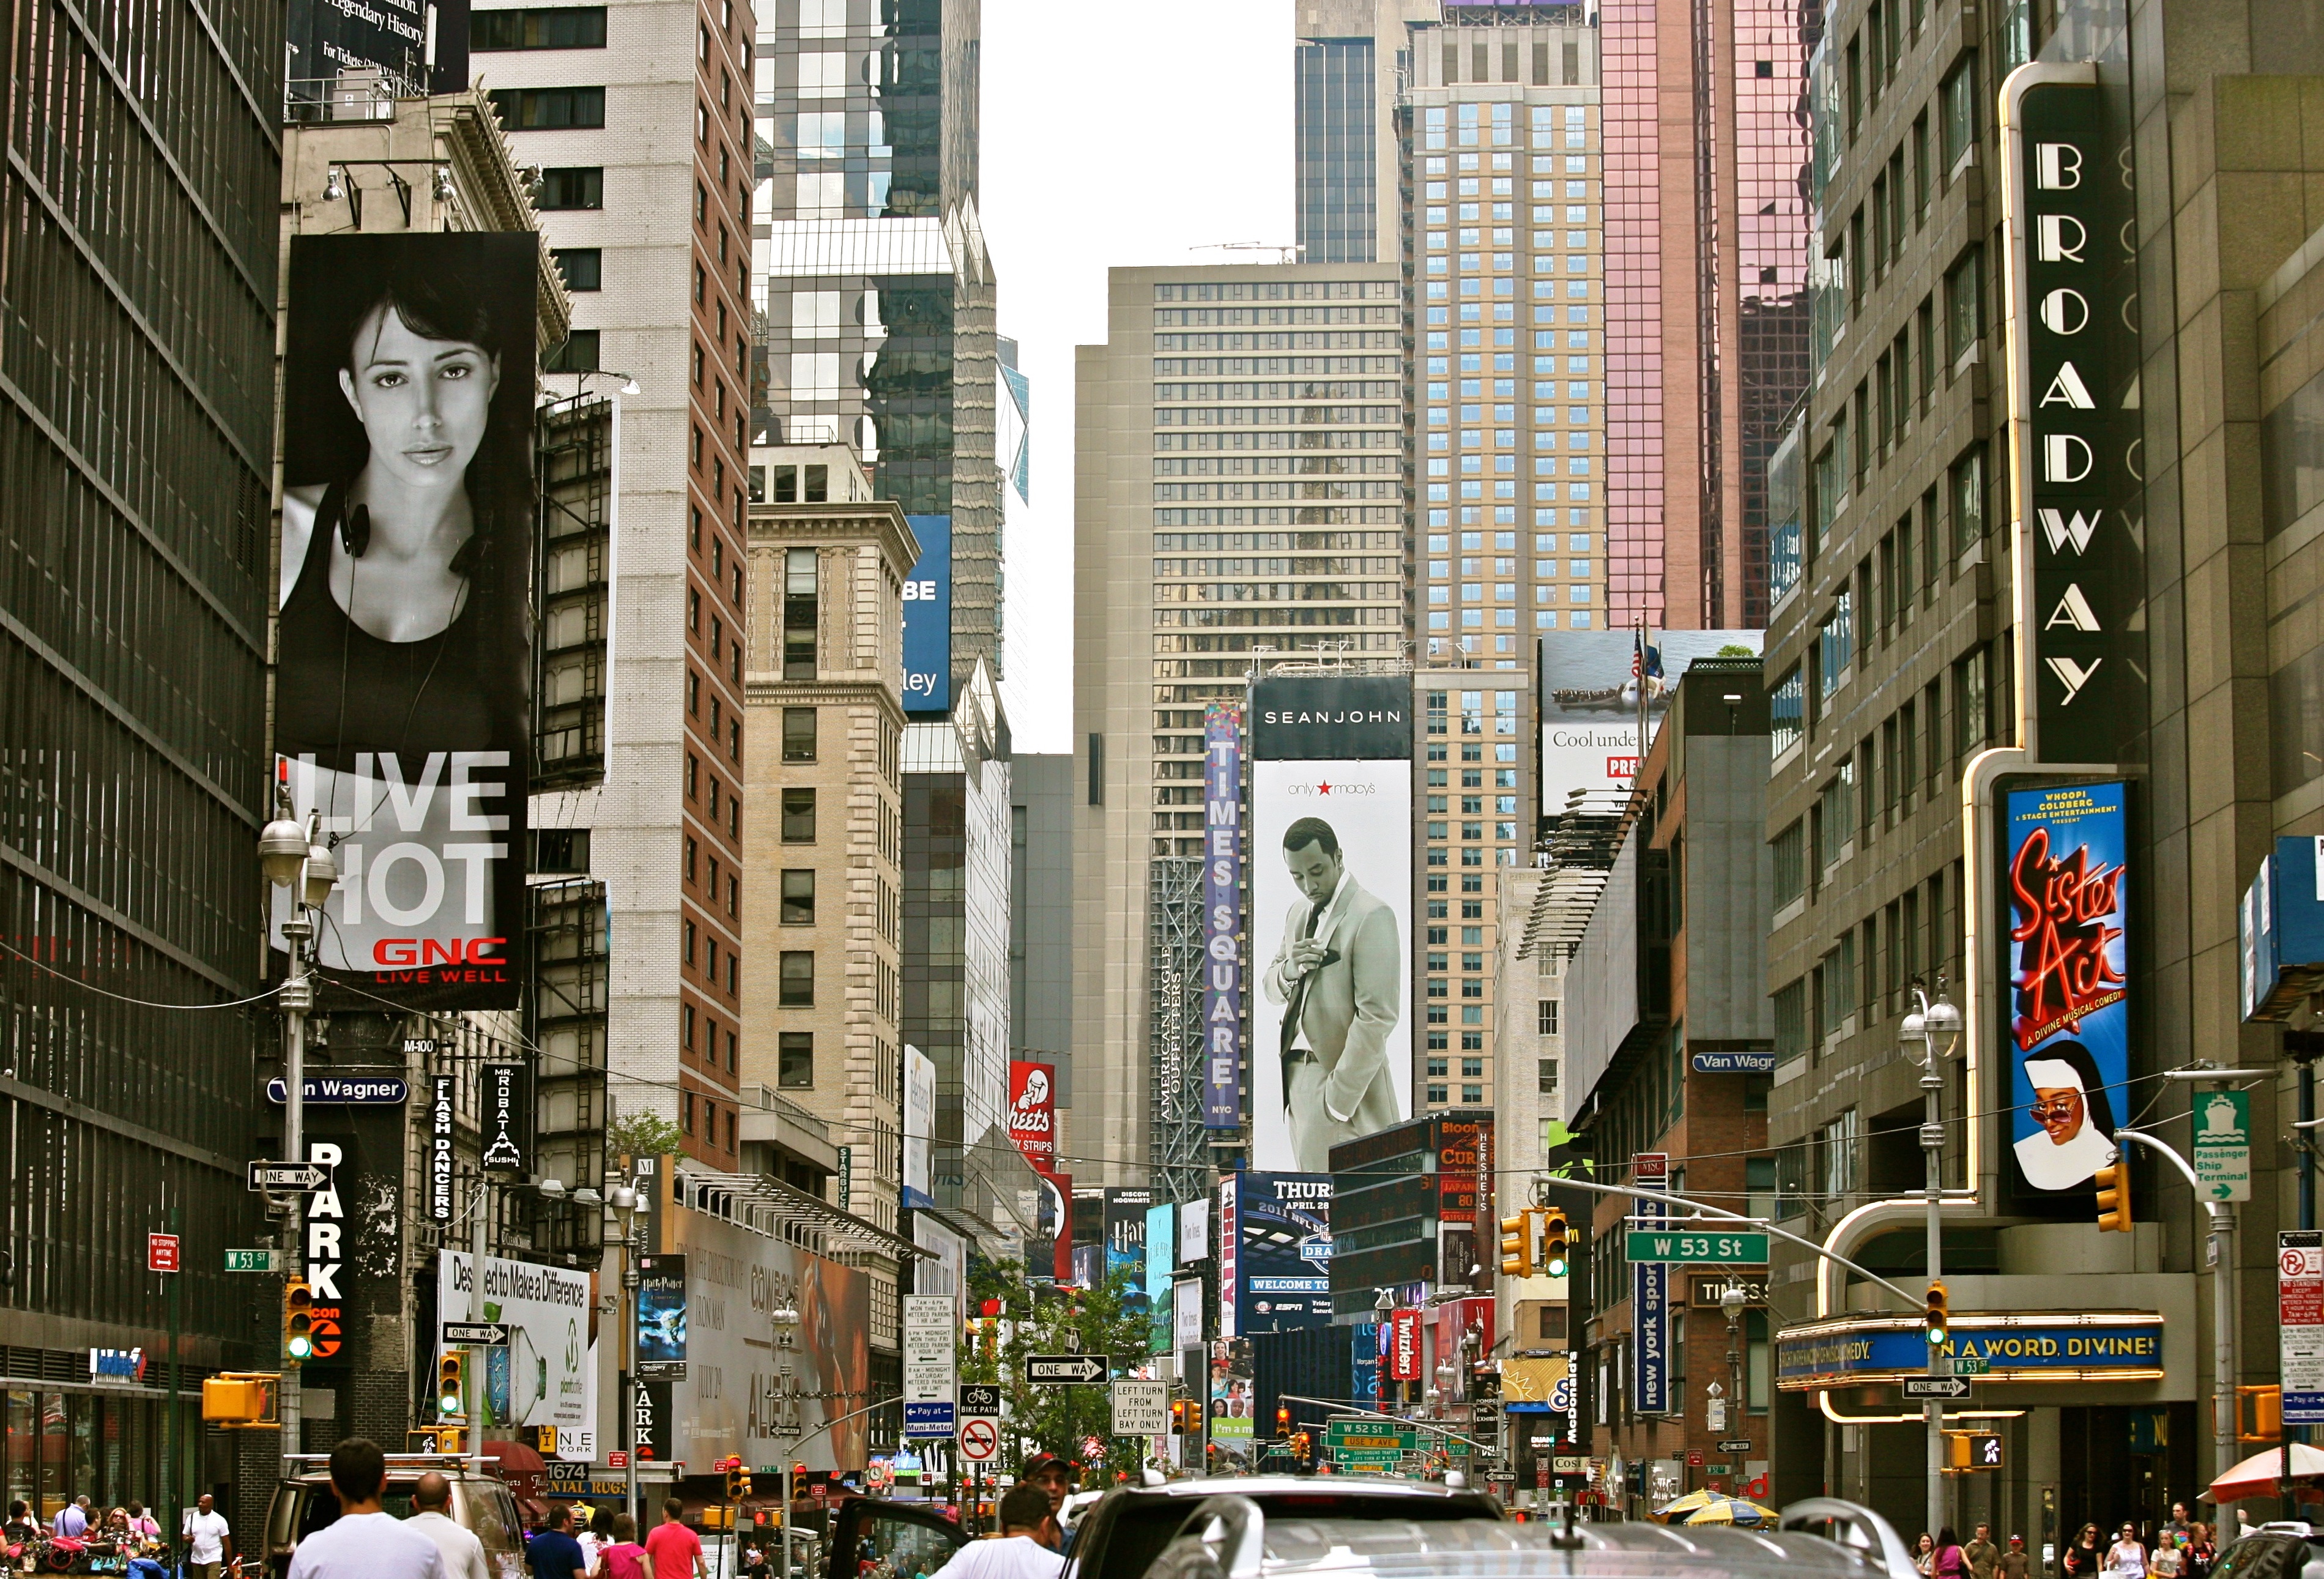 Dating in New York a devenit mai usor sau mai greu? 8 New Yorkers cantaresc